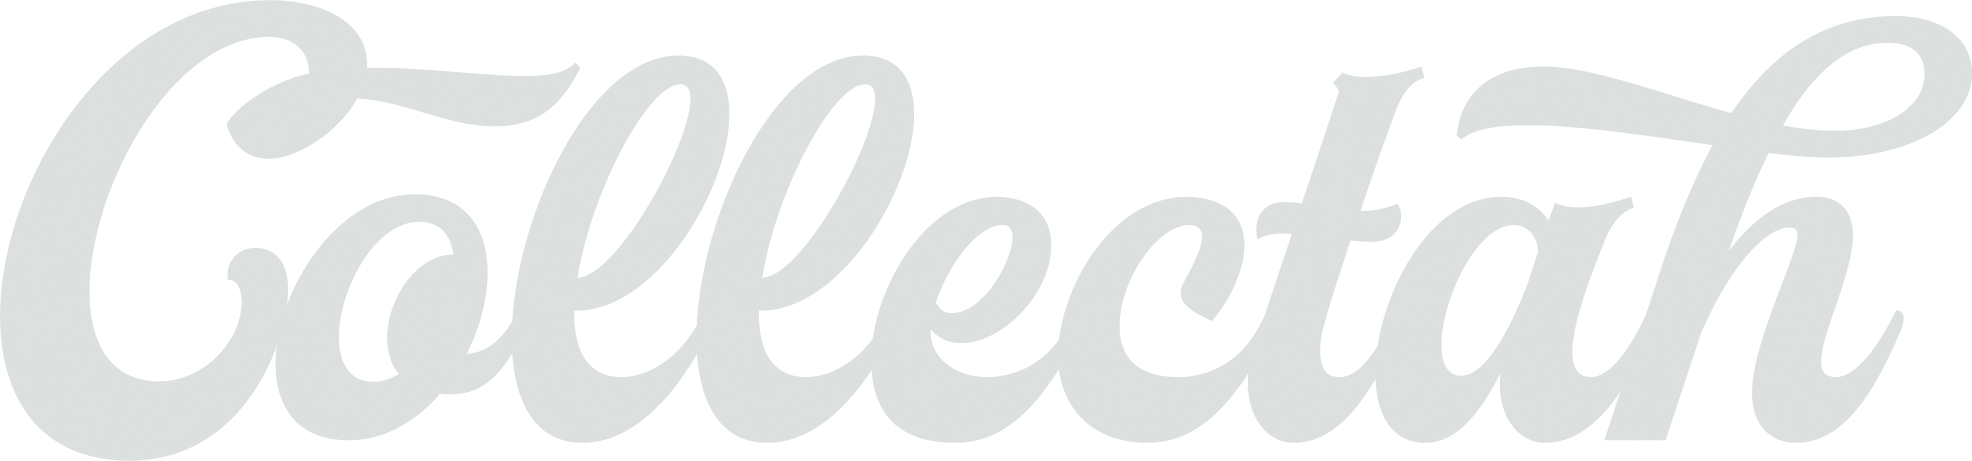 Collectah Logo